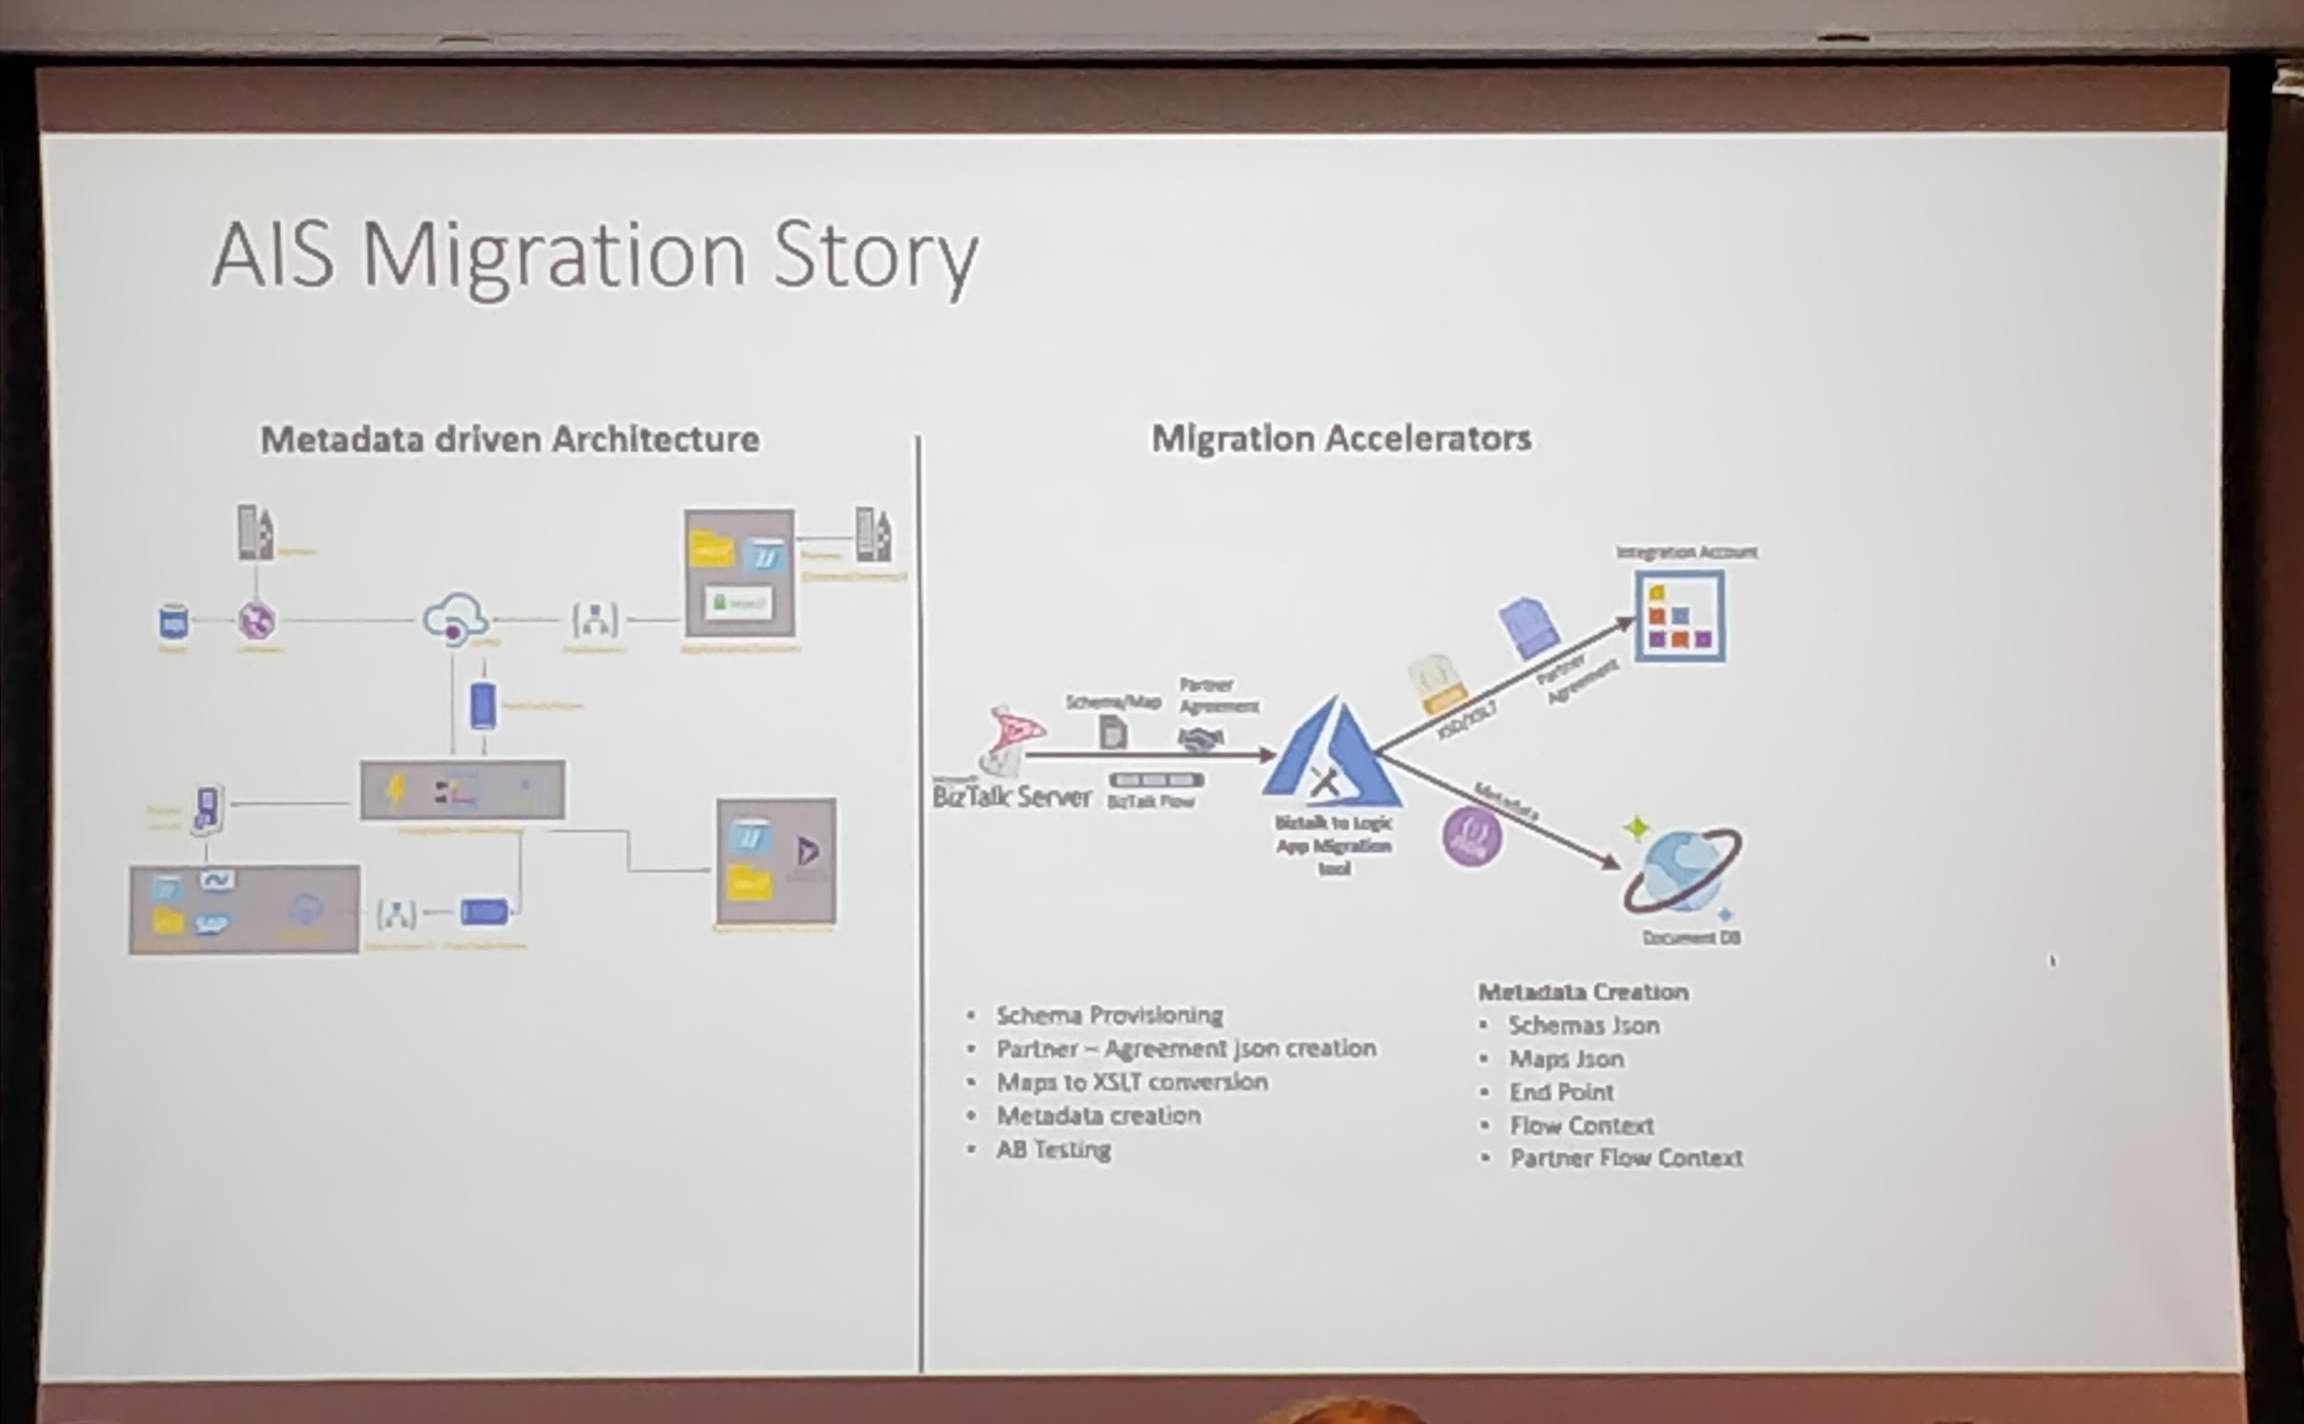  AIS Migration Story